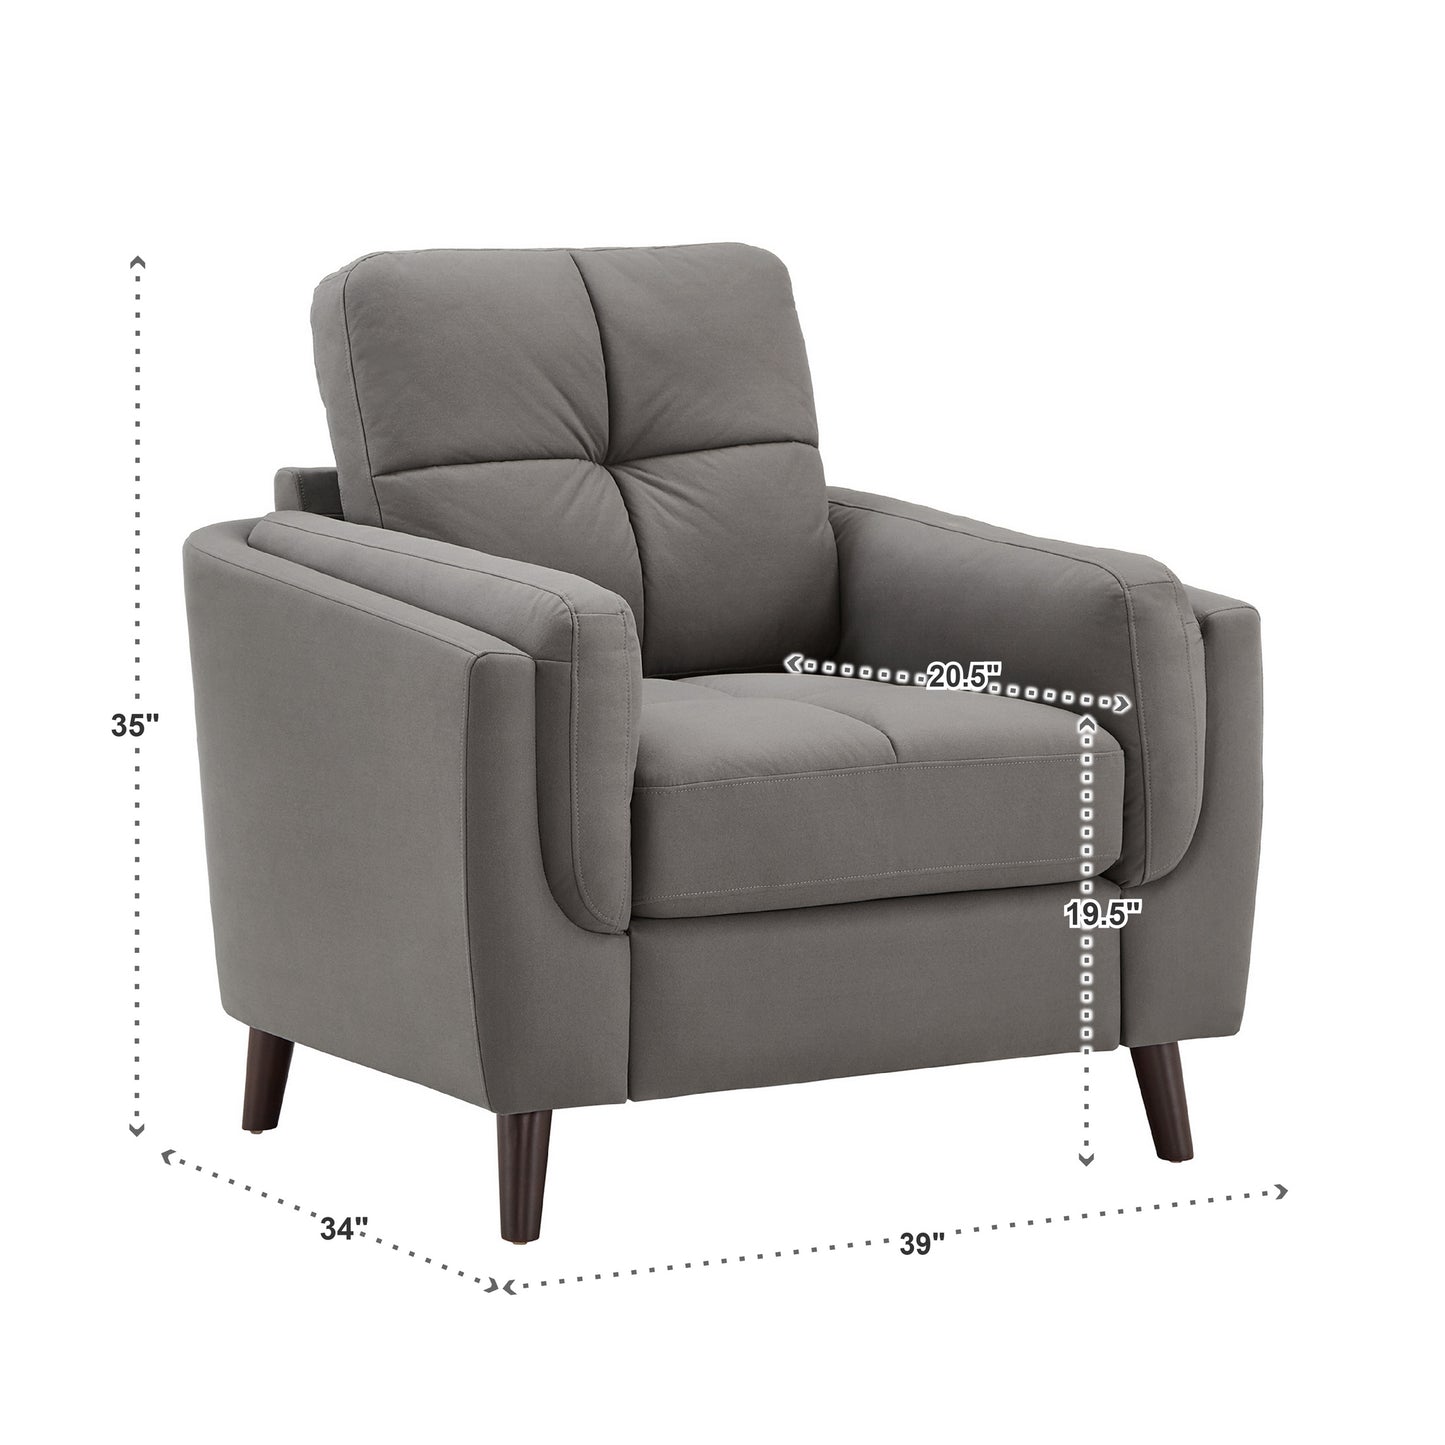 39" Wide Microfiber Armchair - Grey